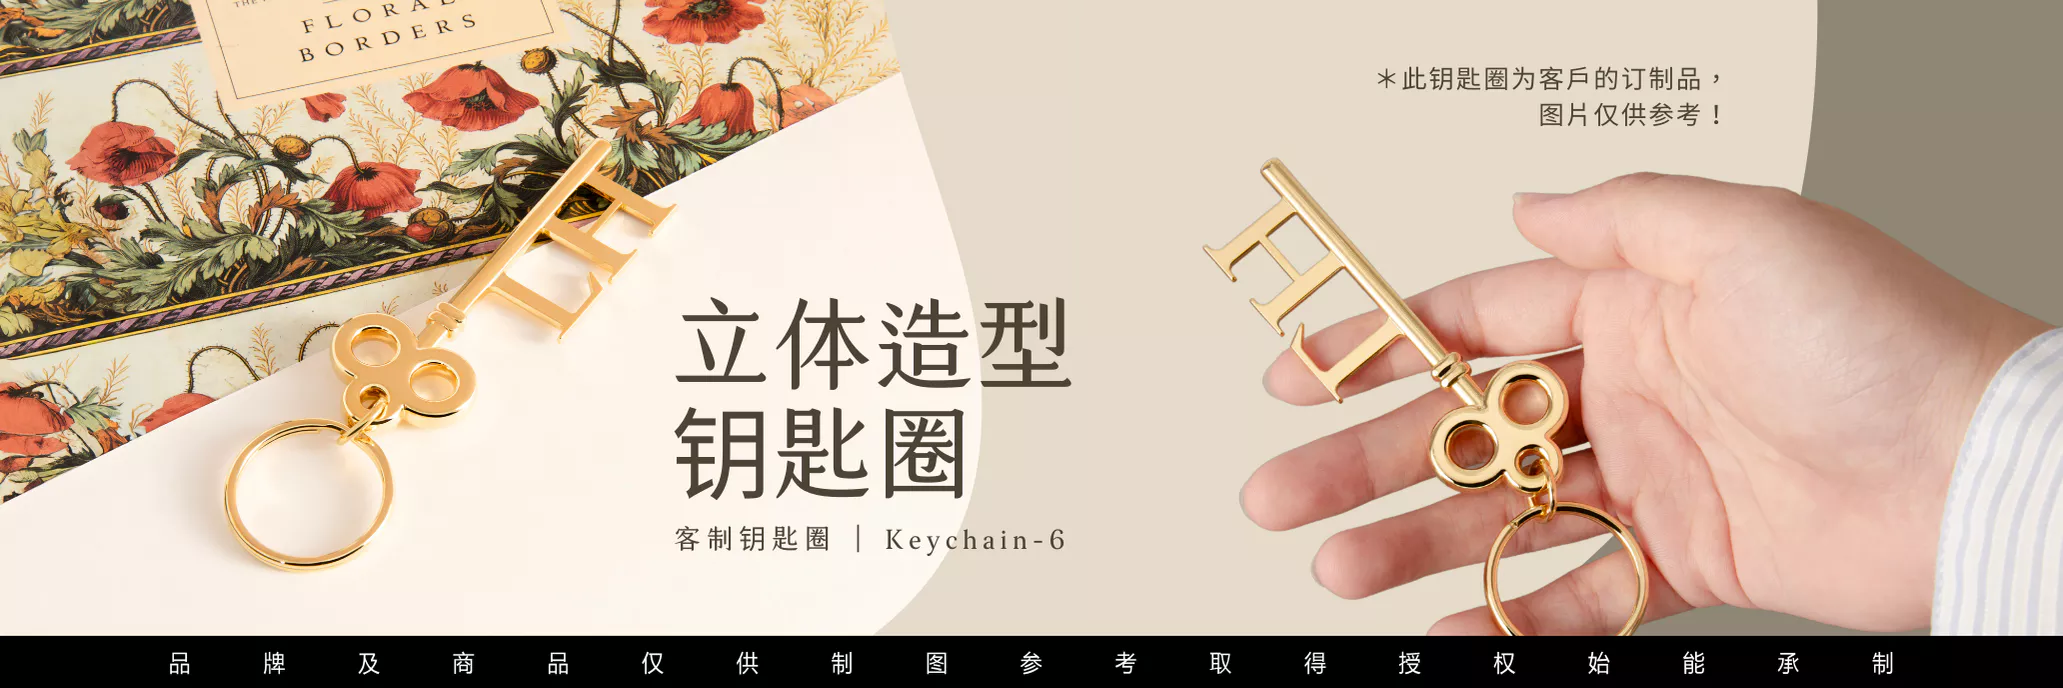 Keychain-6_金属钥匙造型钥匙圈_PC-cn